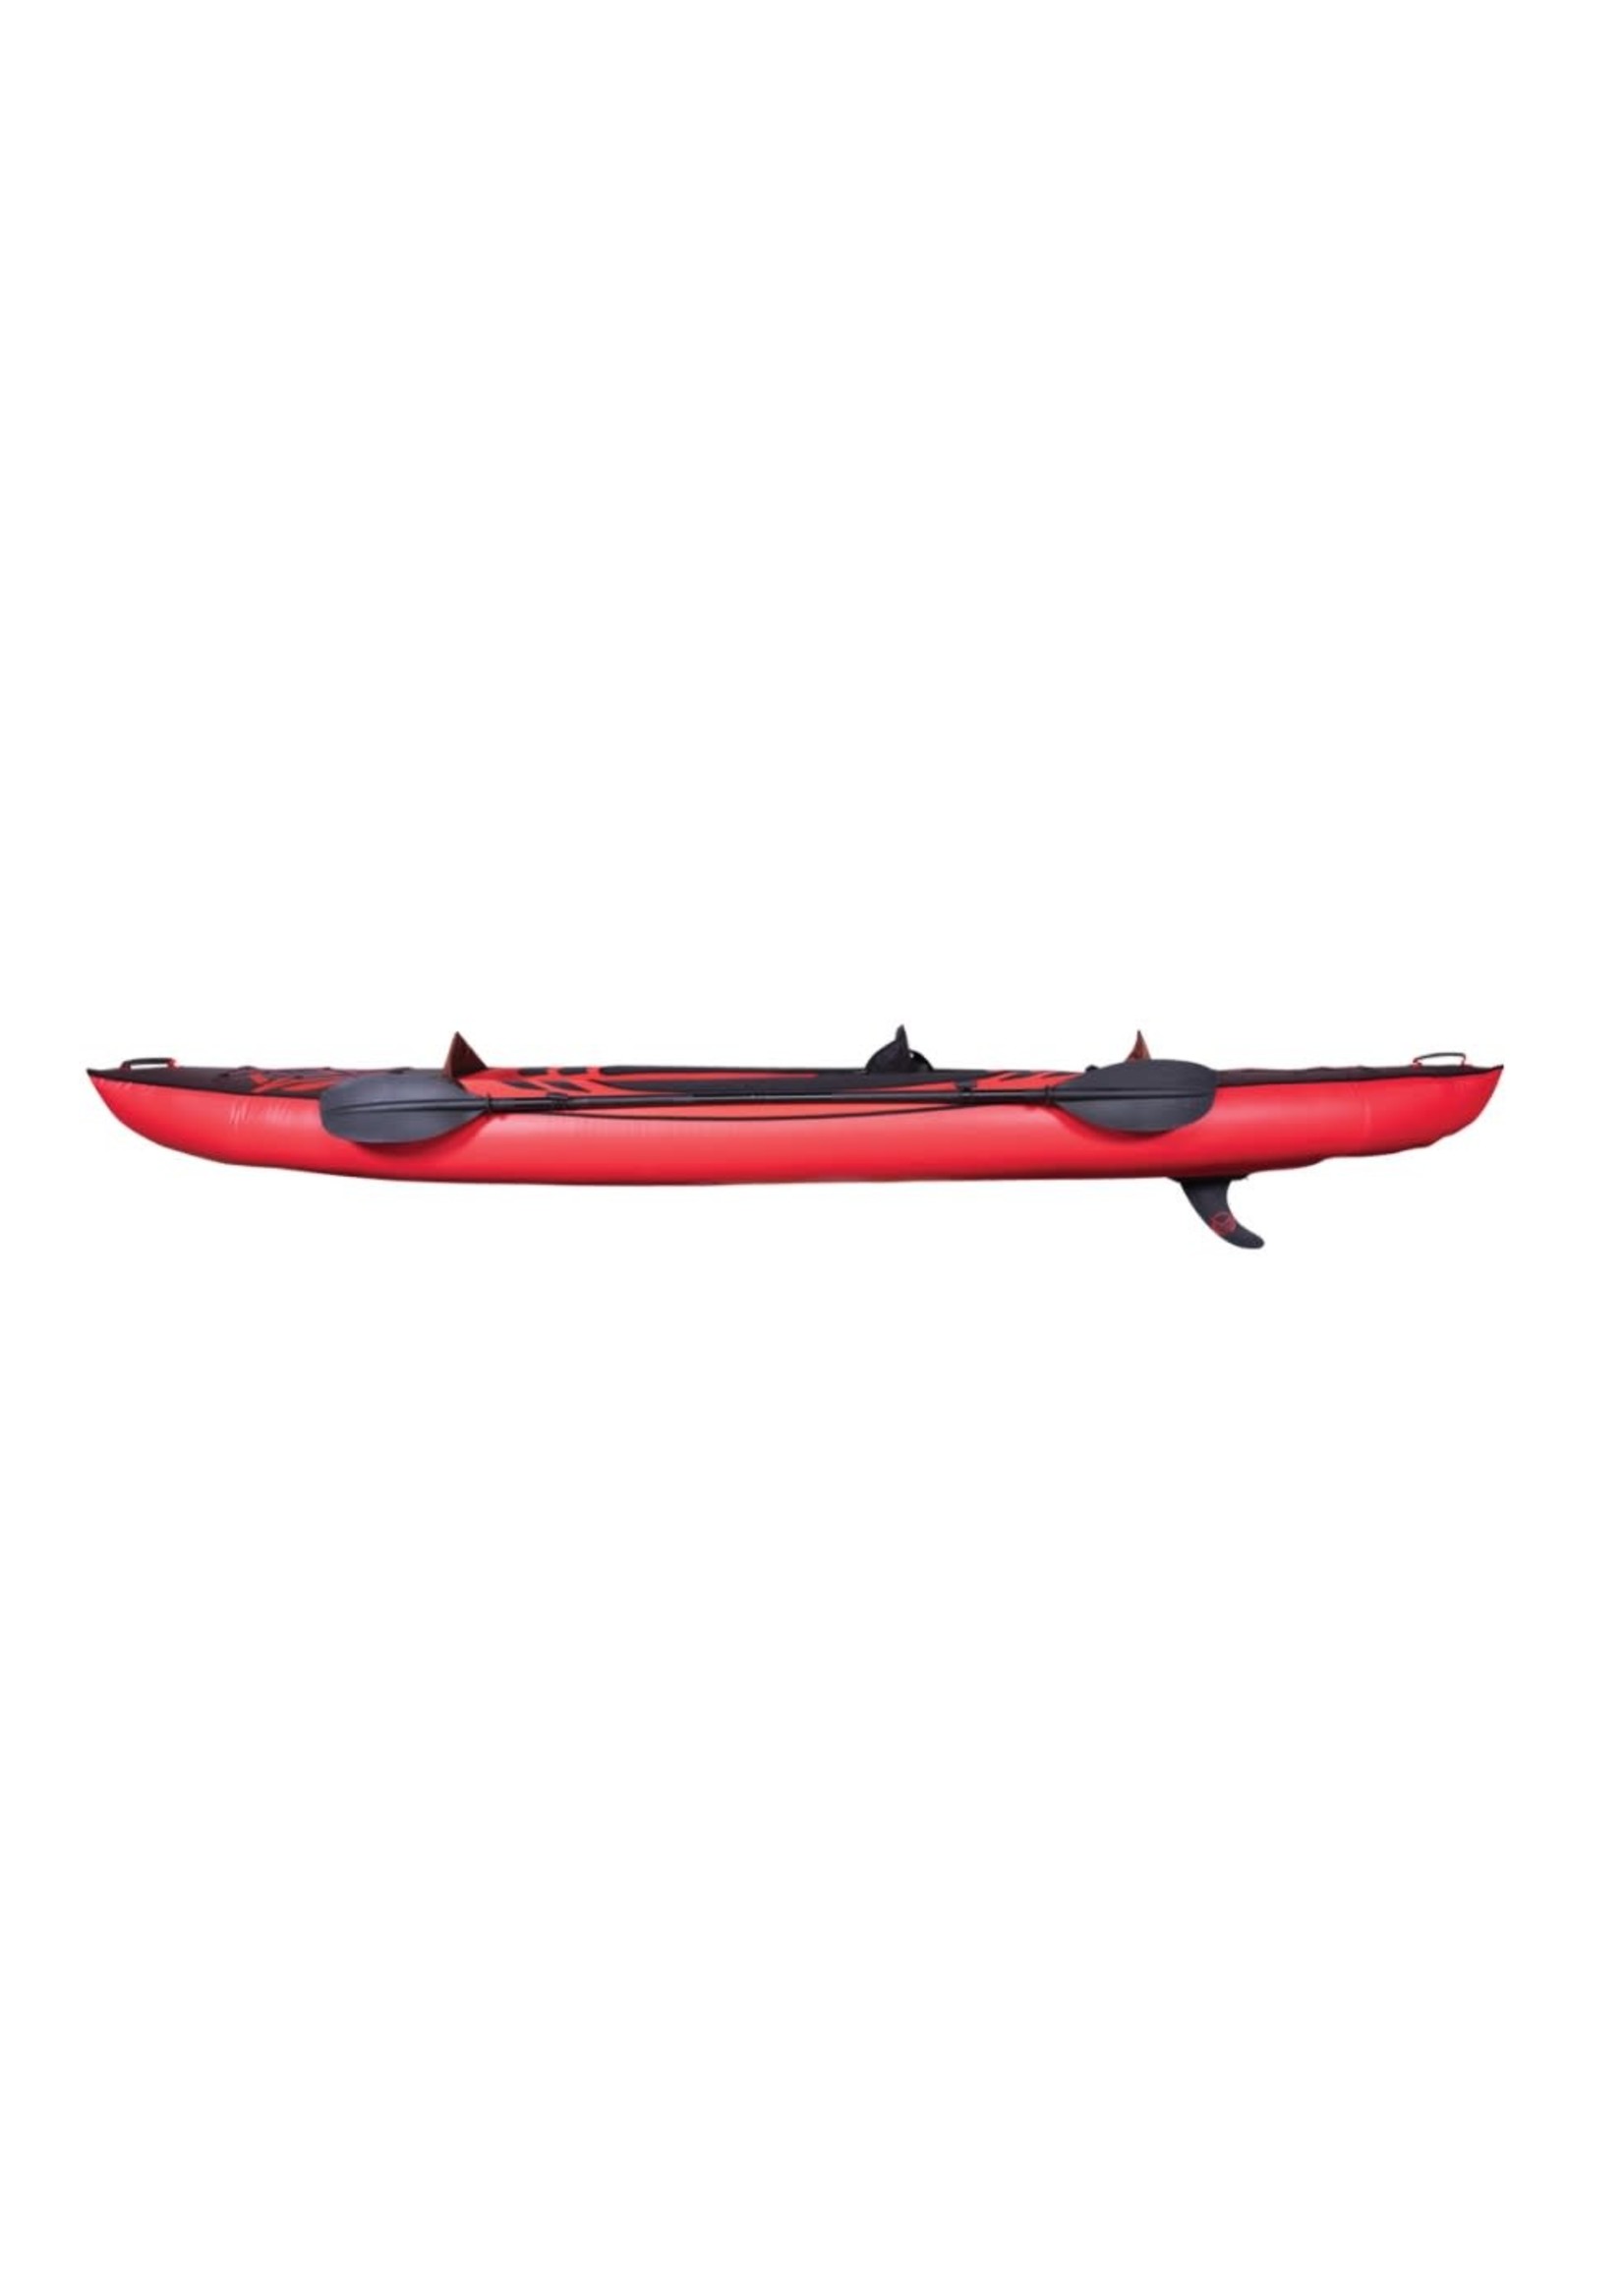 HO Sports HO Sports Ranger 1 Inflatable Kayak